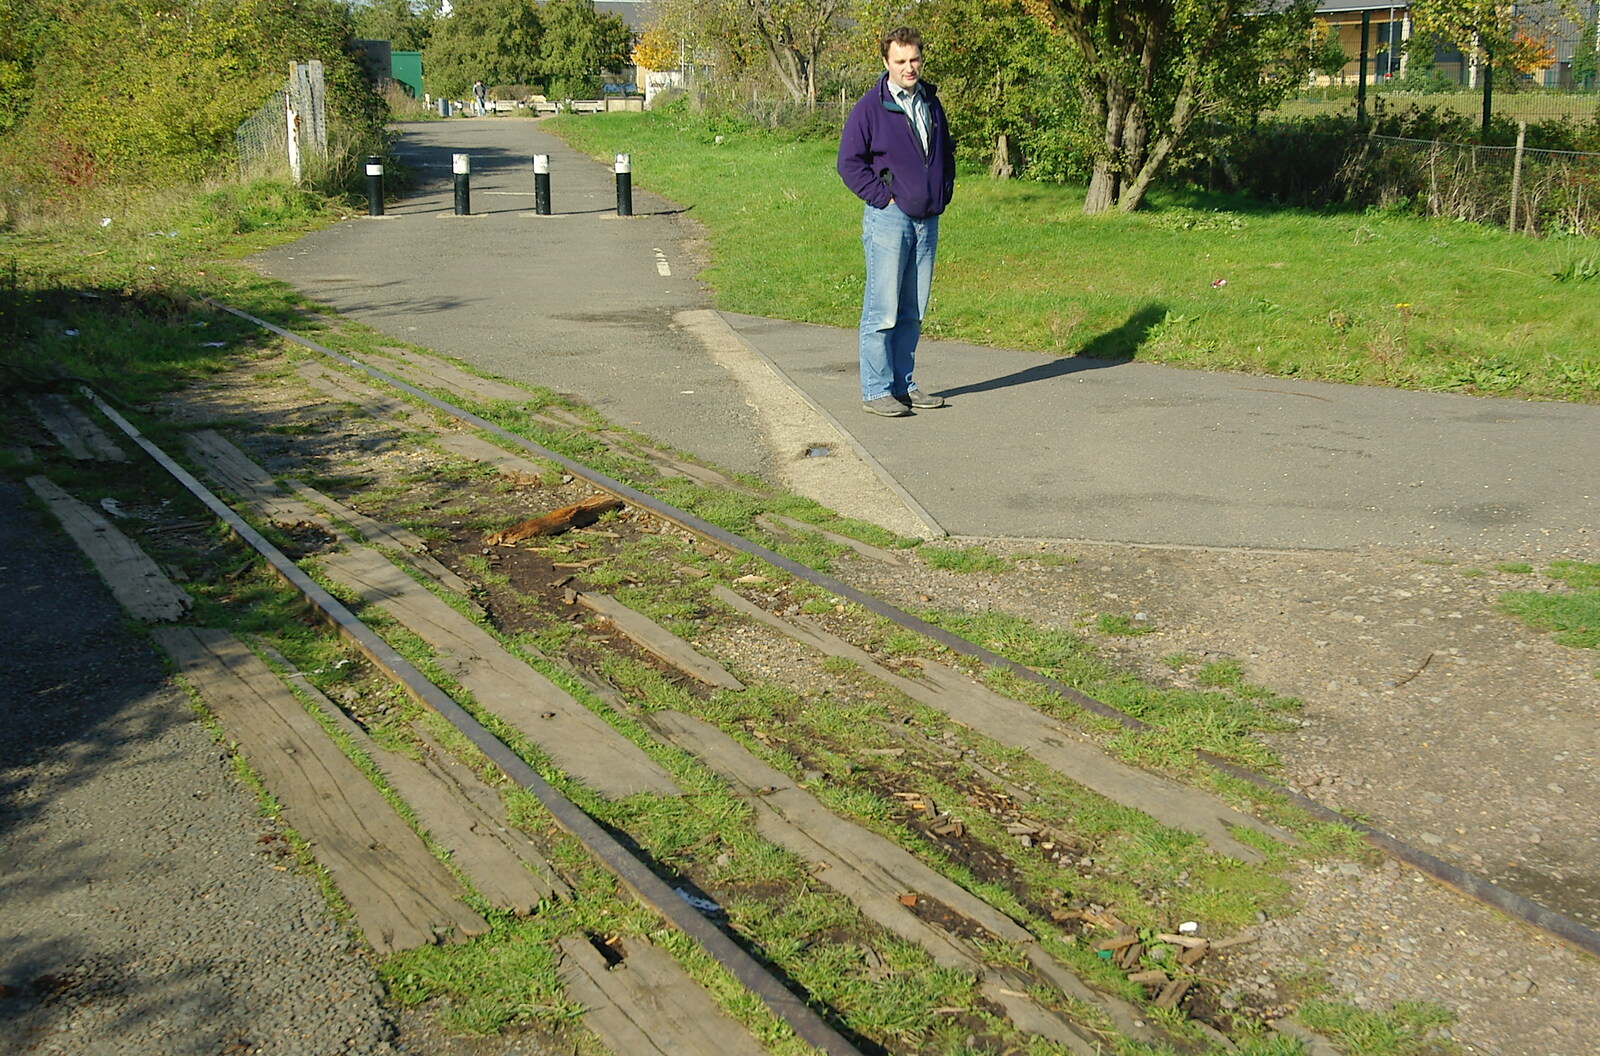 Disused Cambridge Railway, Milton Road, Cambridge - 28th October 2005: Dan stands where the tracks cross a path